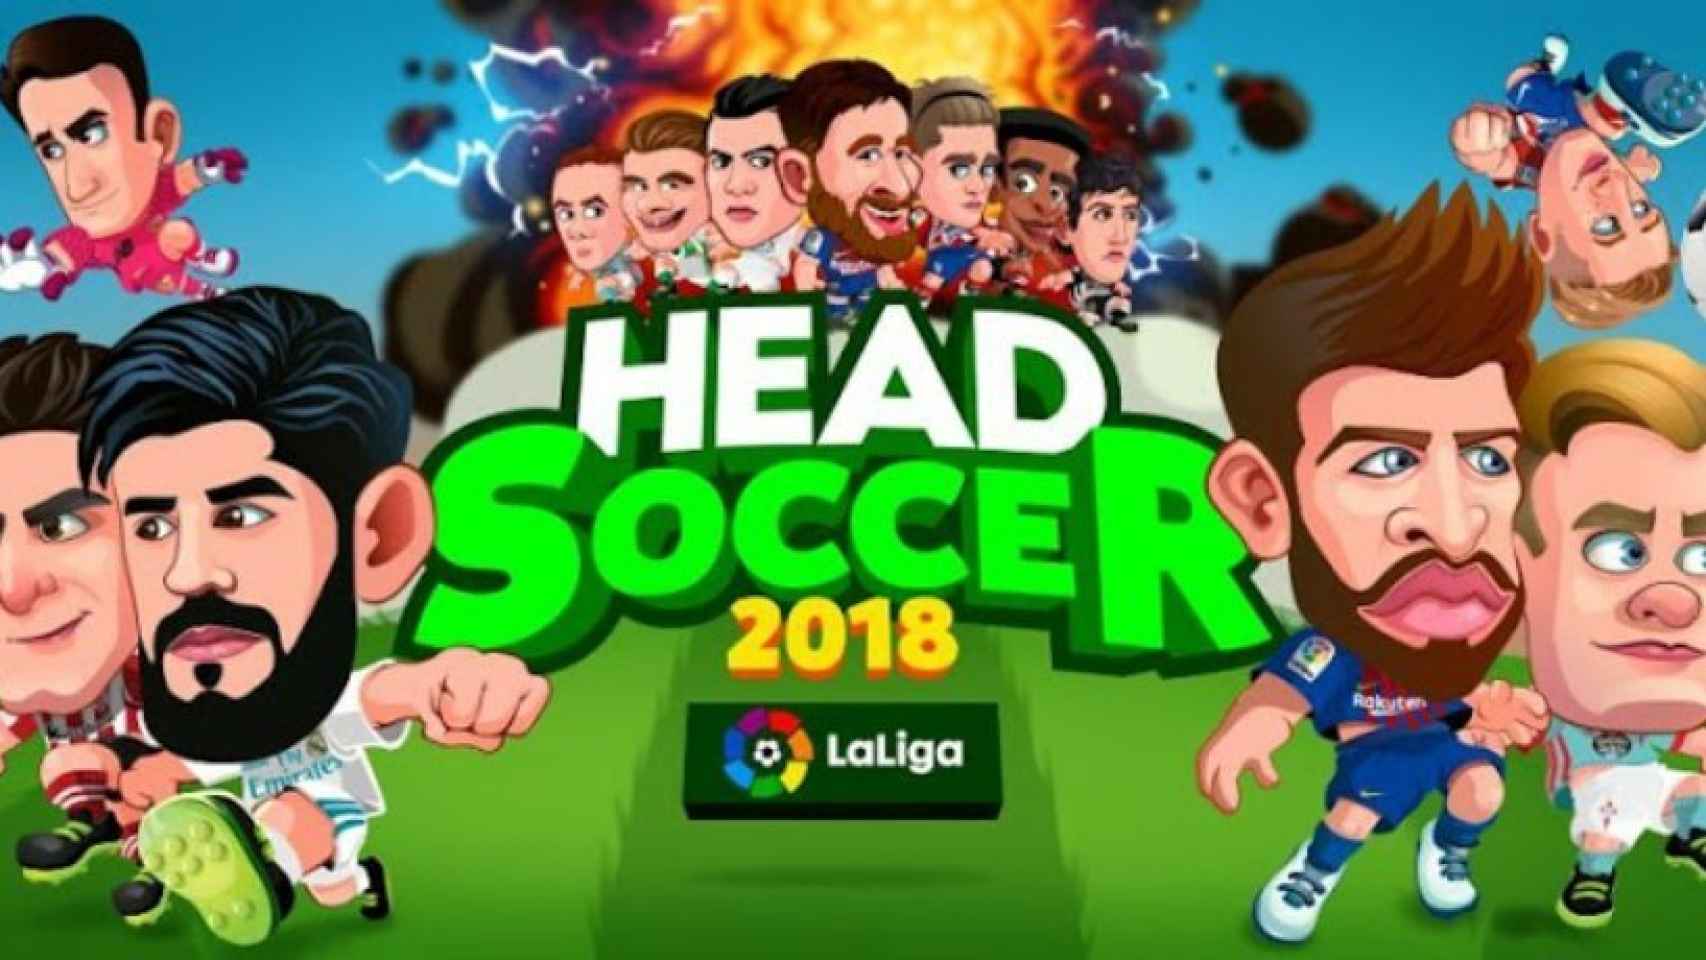 Imagen promocional de Head Soccer La Liga 2018